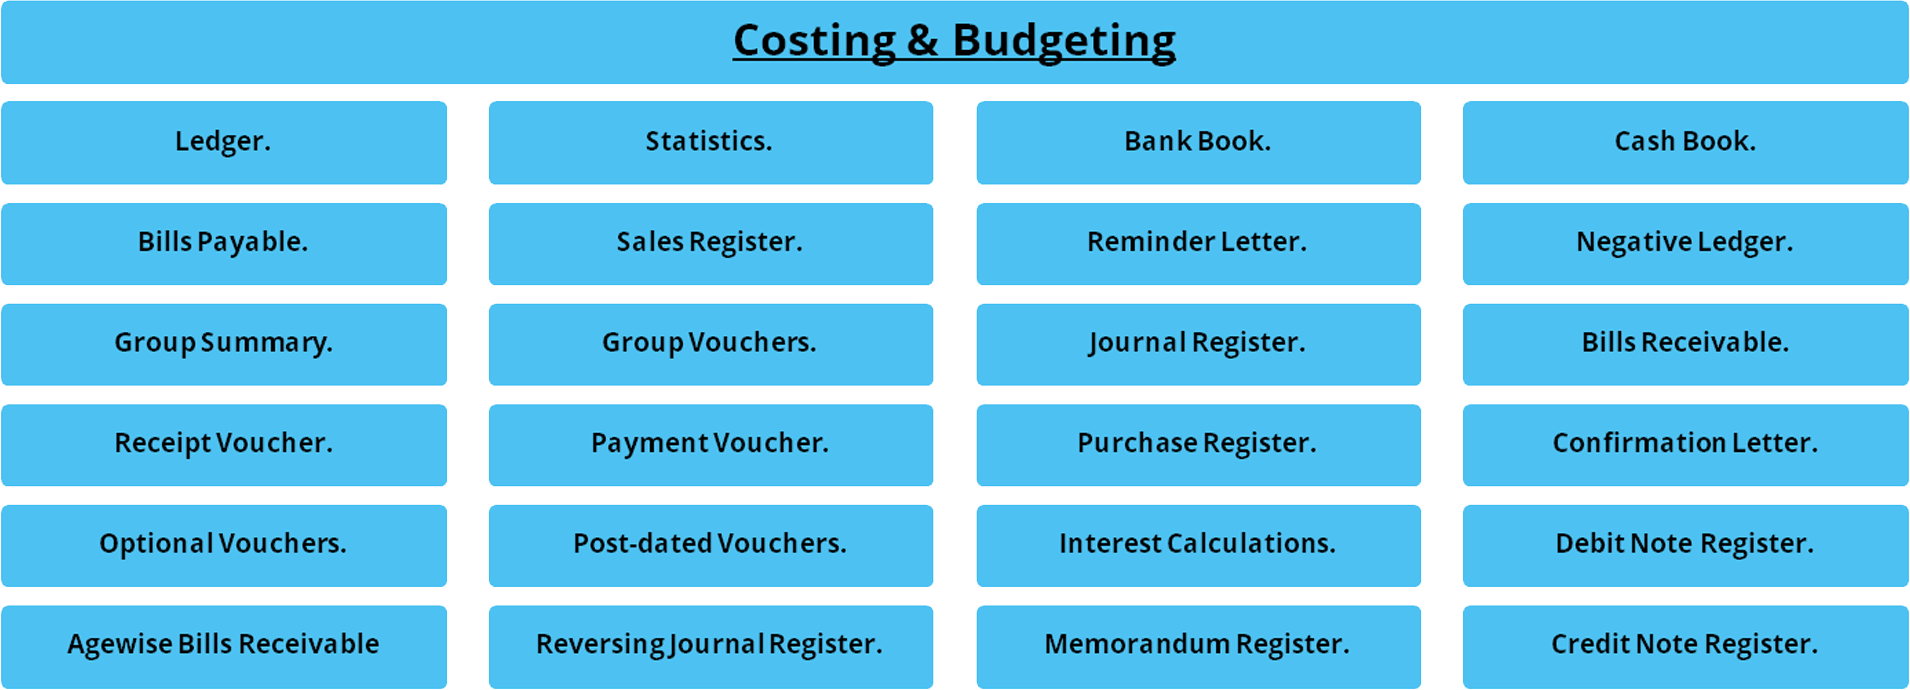 Costing Budgeting